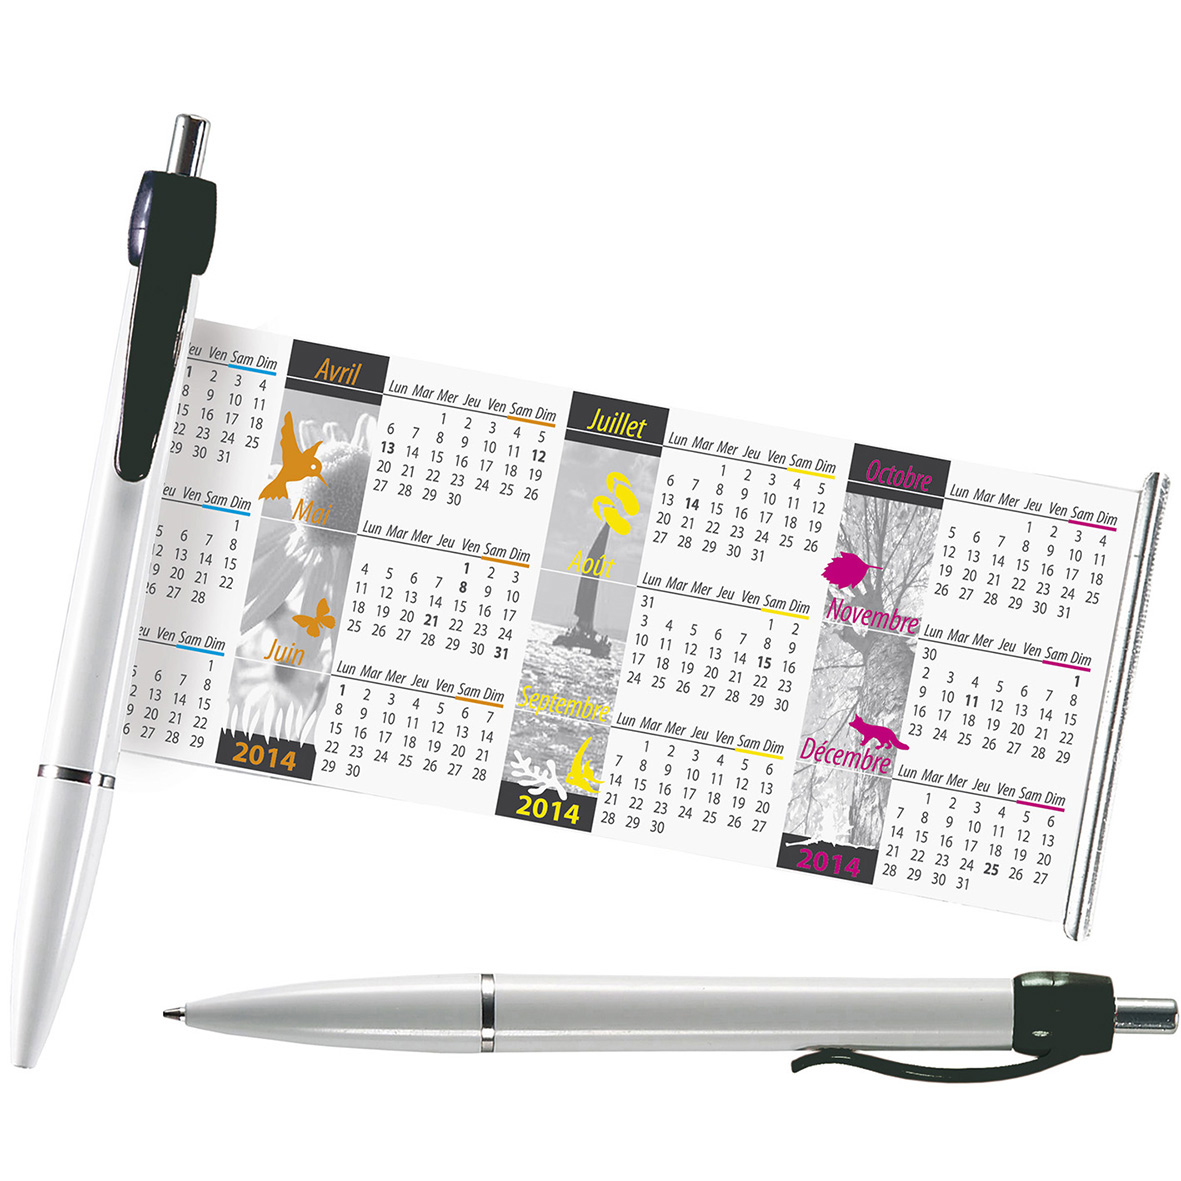 stylo publicitaire calendrier 2014/2015 cote626 - techno - stylo multifonction